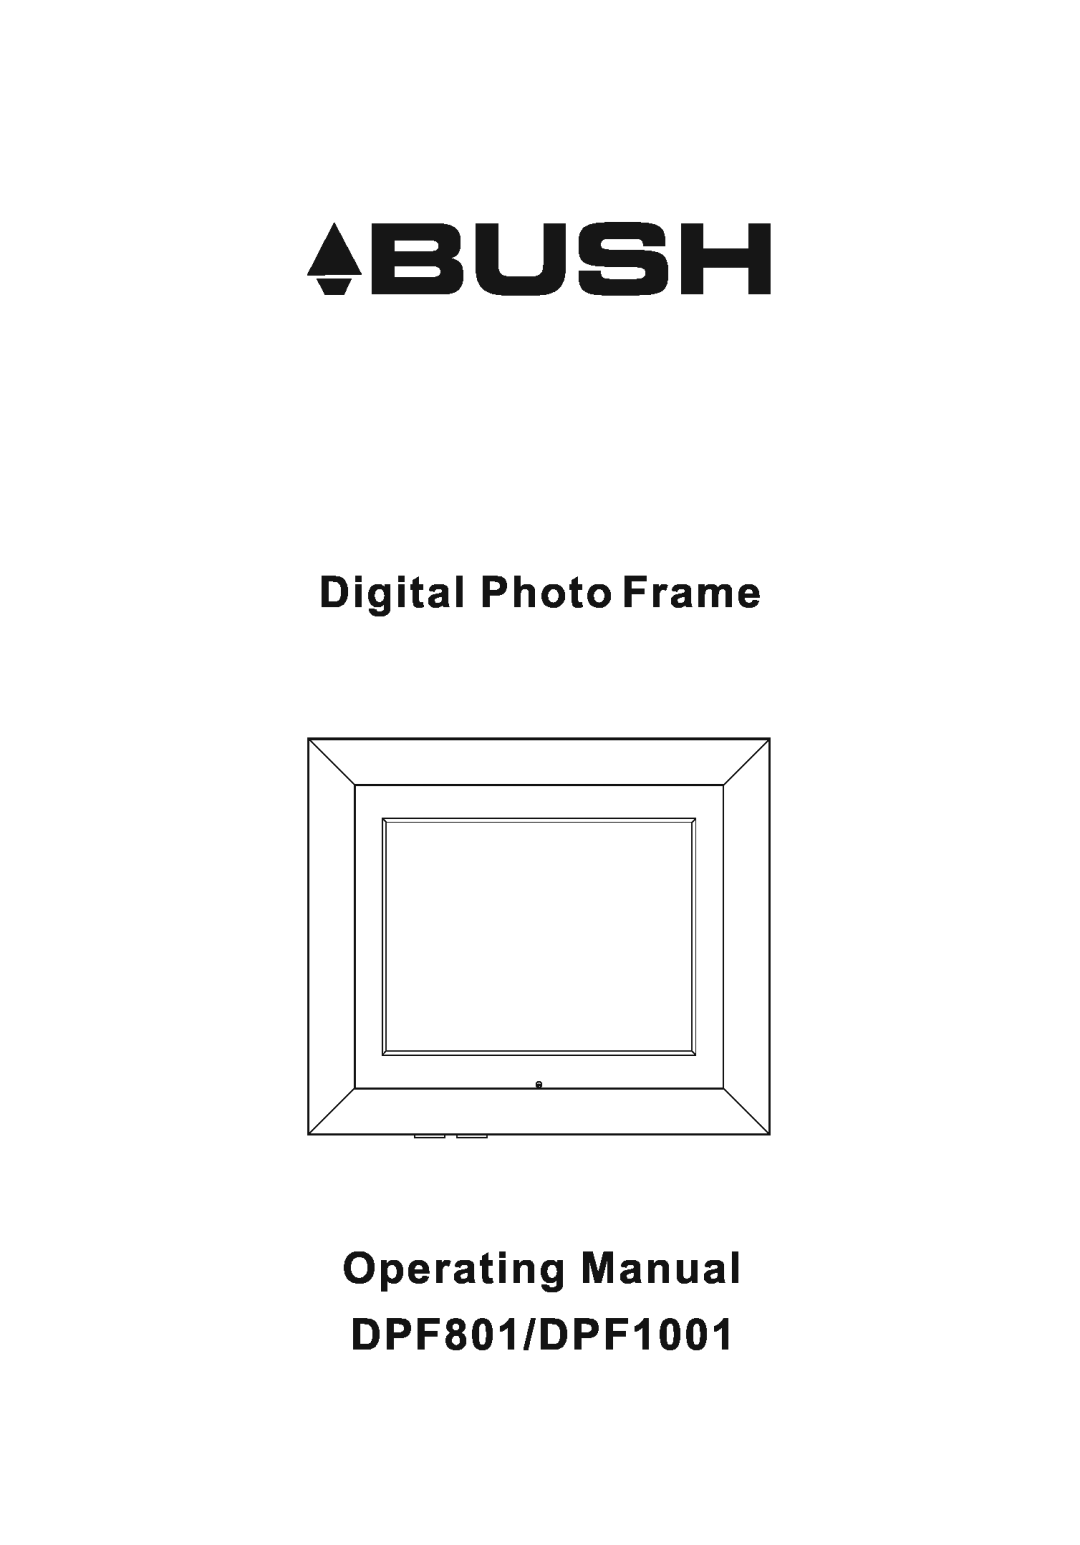 Bush manual Digital Photo Frame, Operating Manual DPF801/DPF1001 